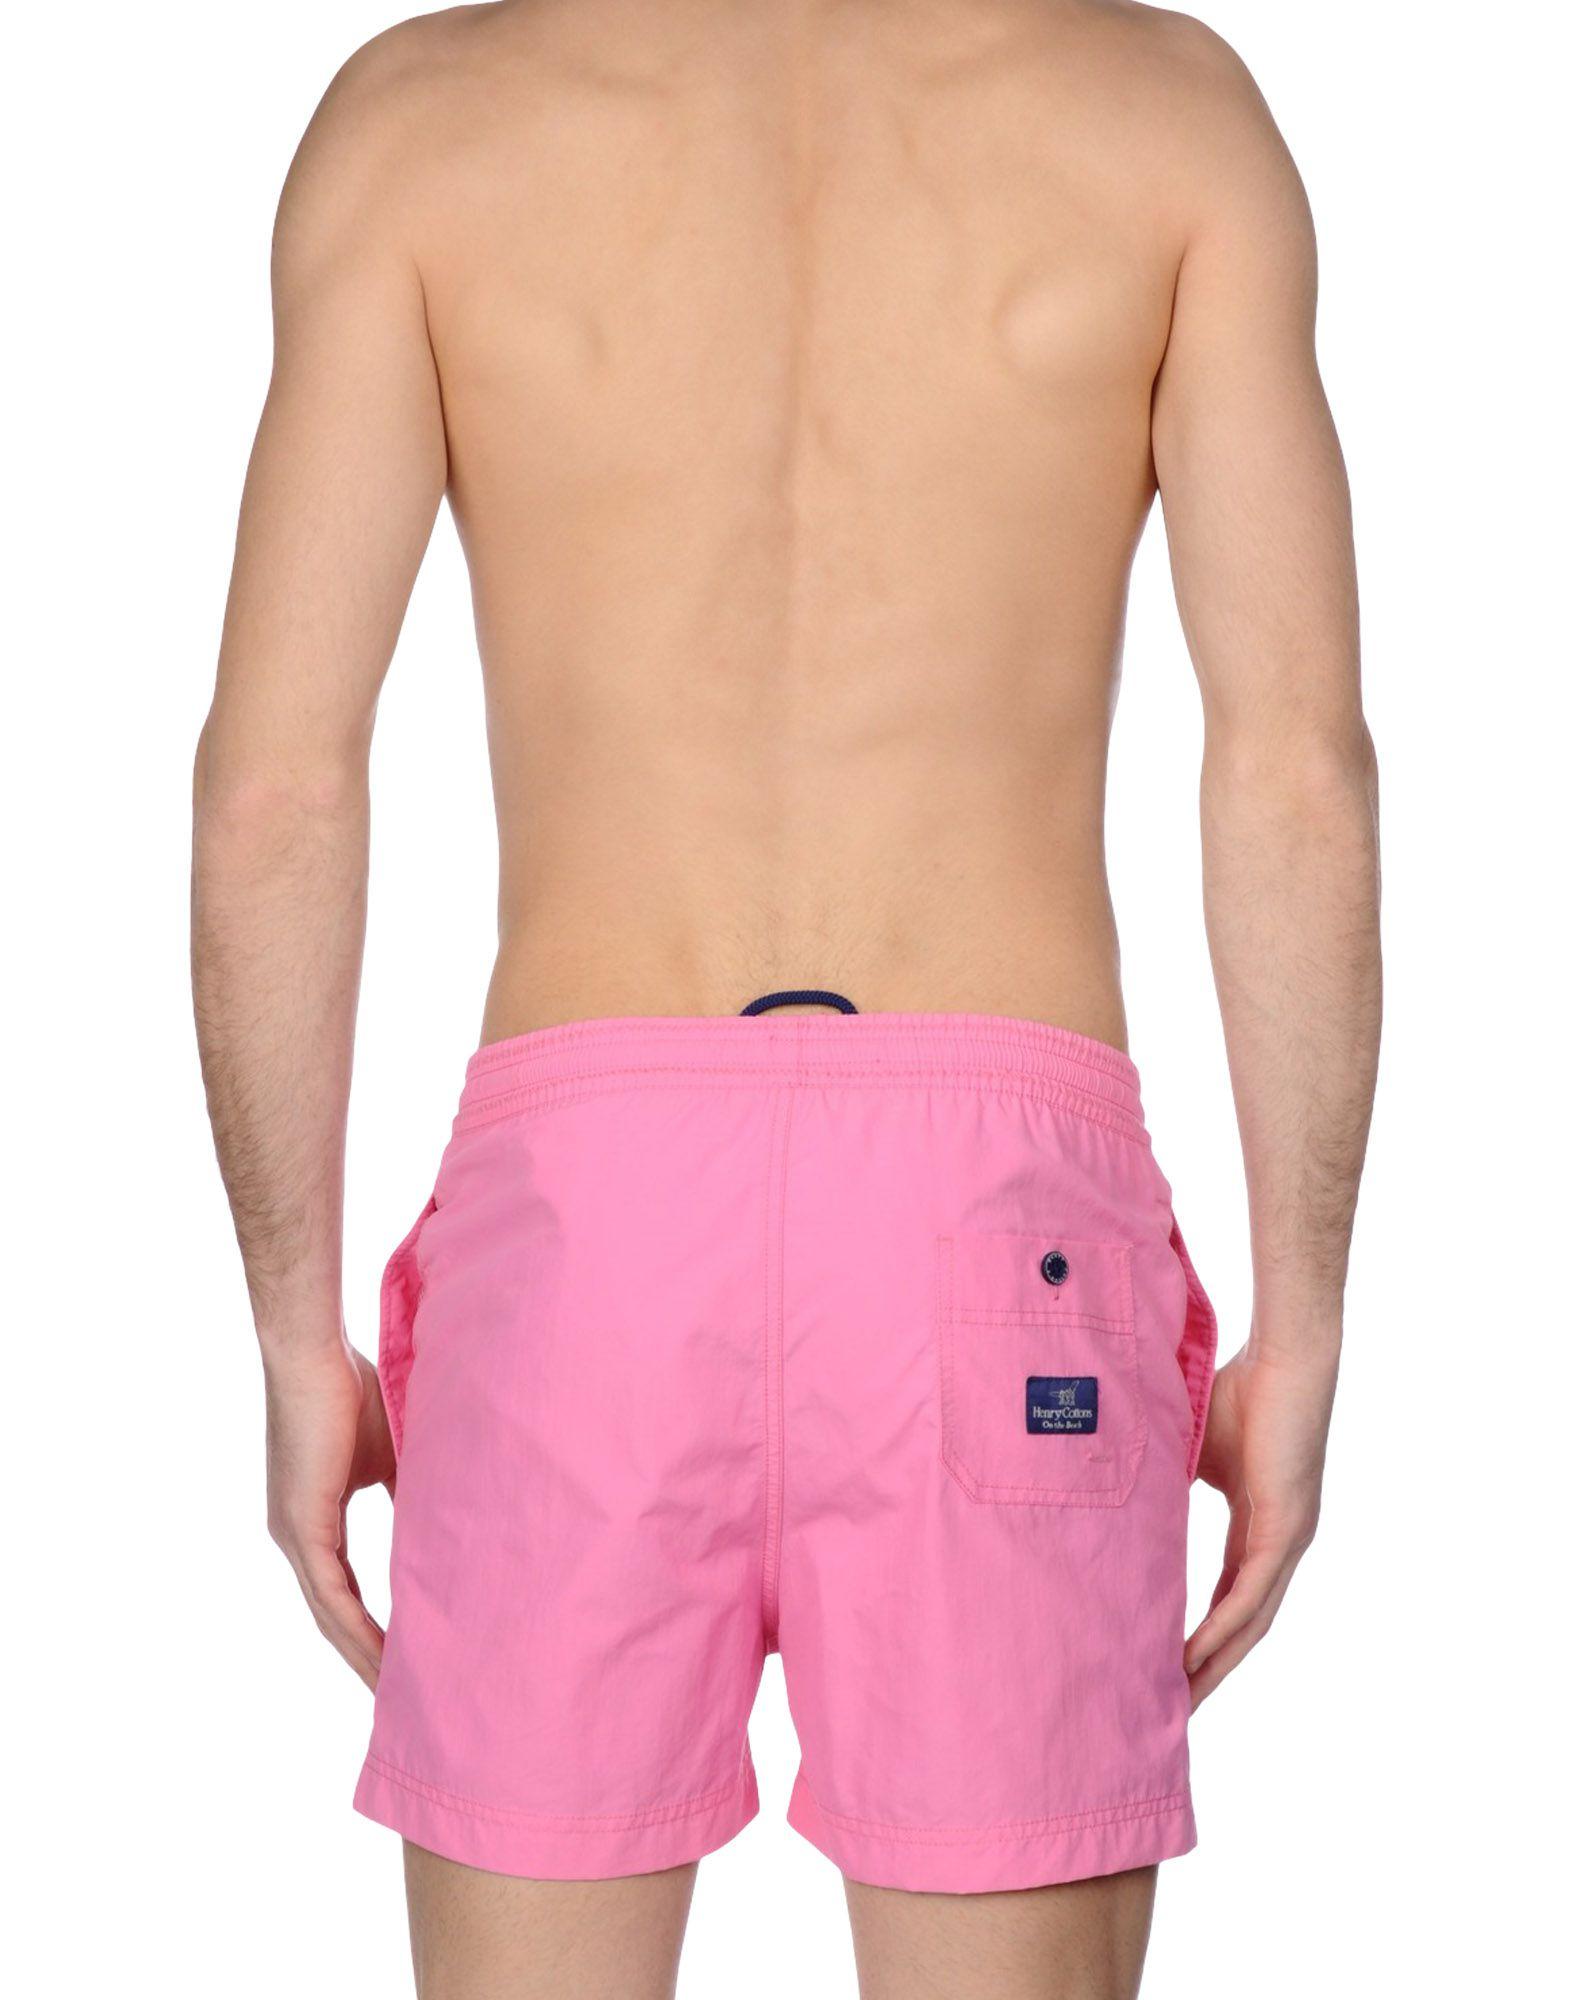 Lyst - Henry cotton's Swim Trunks in Pink for Men